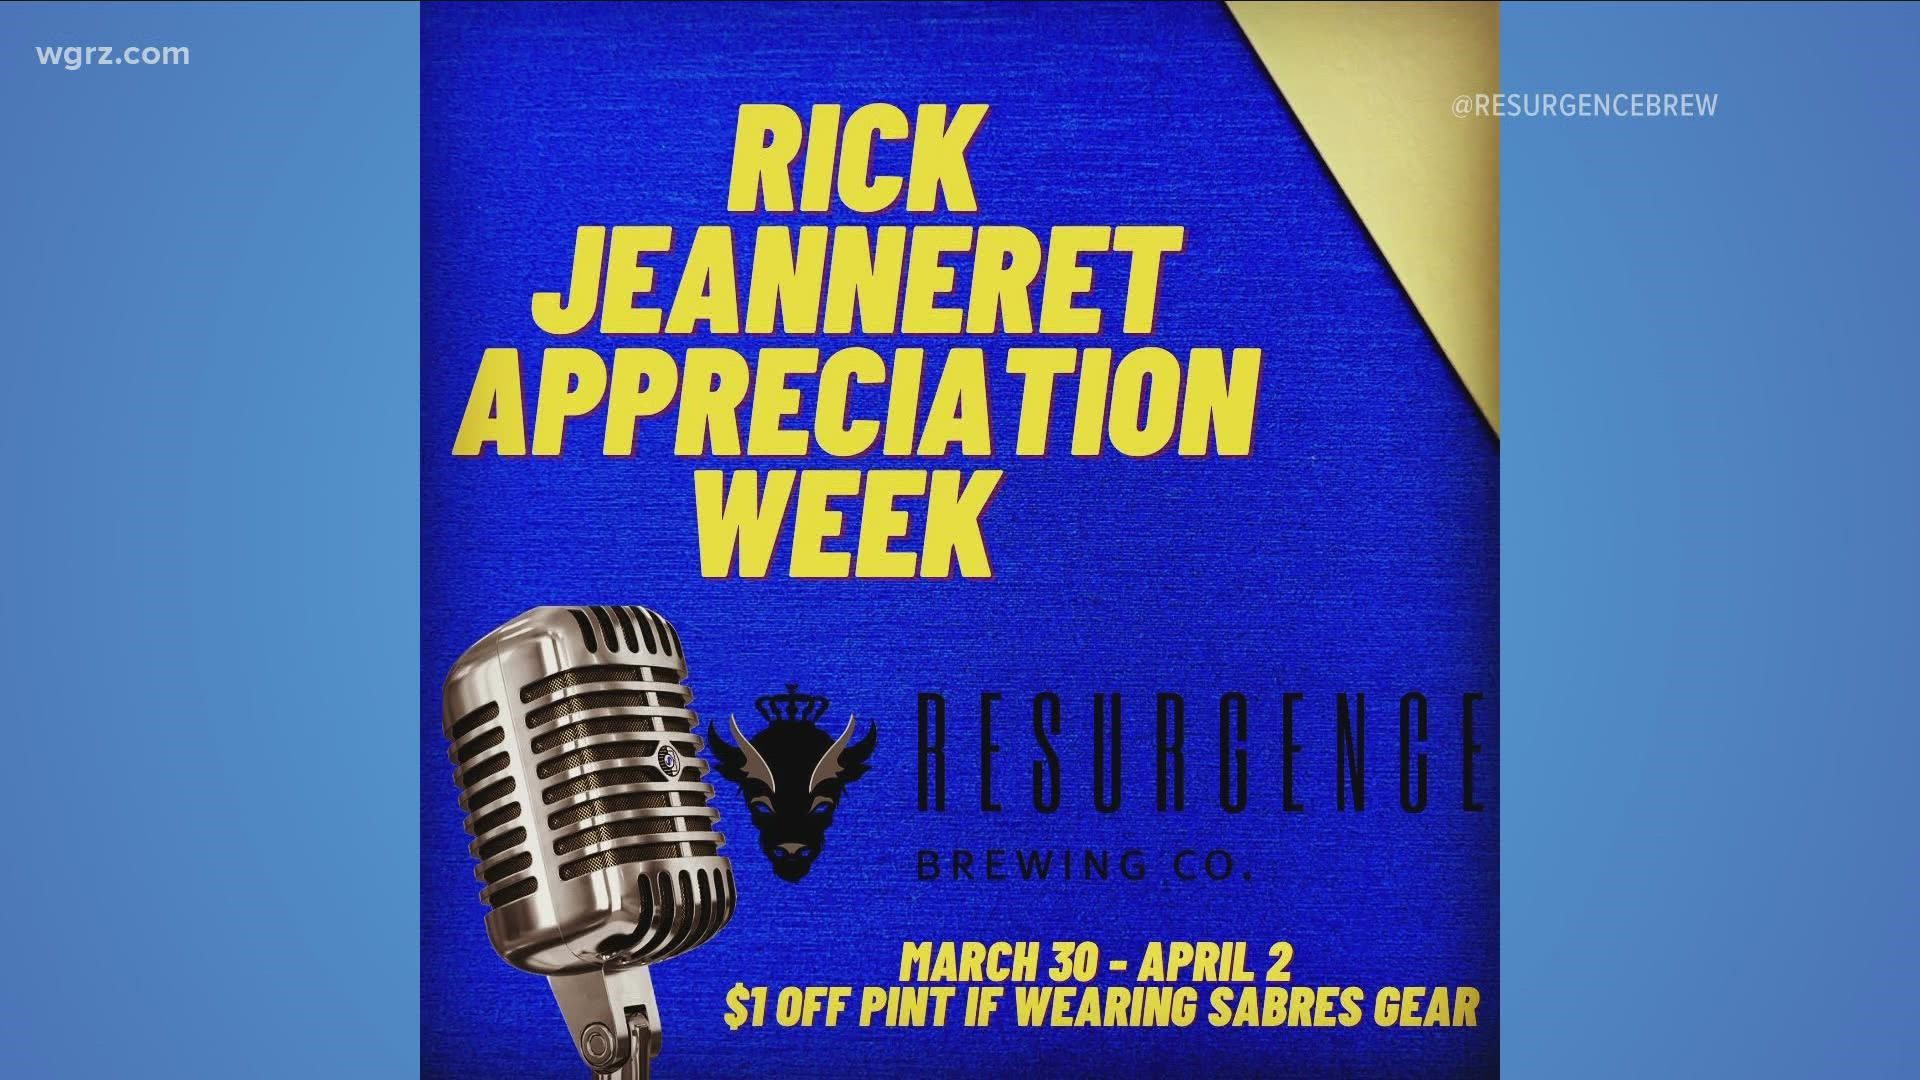 RJ appreciation week at Resurgence Brewing taproom